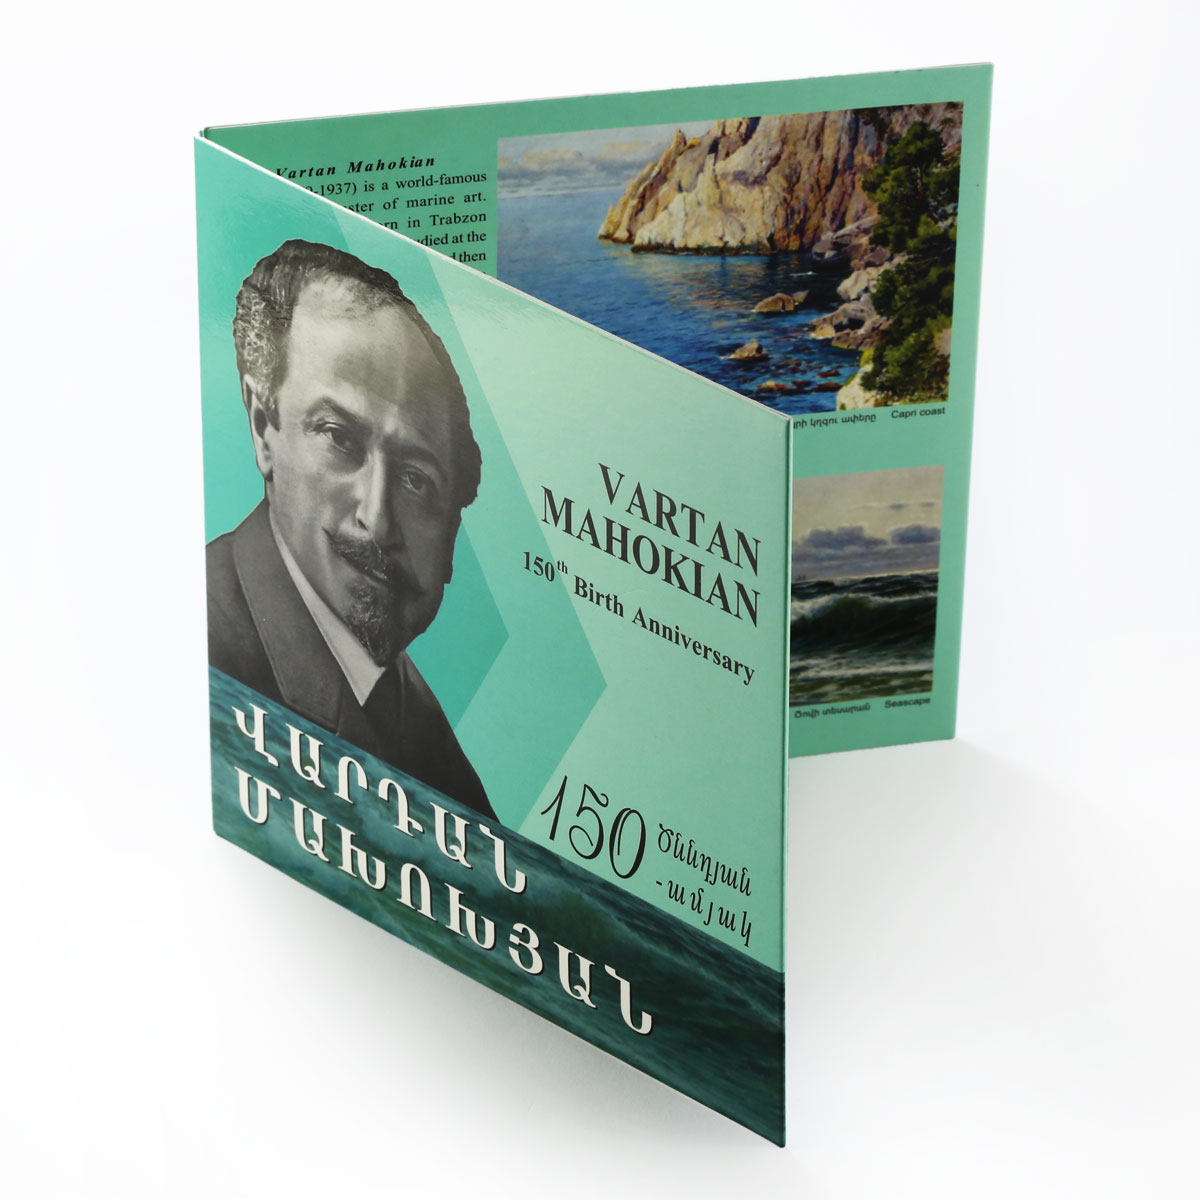 Armenia 100 drams Vartam Mahokian 150th Birth Anniversary coloured silver 2019